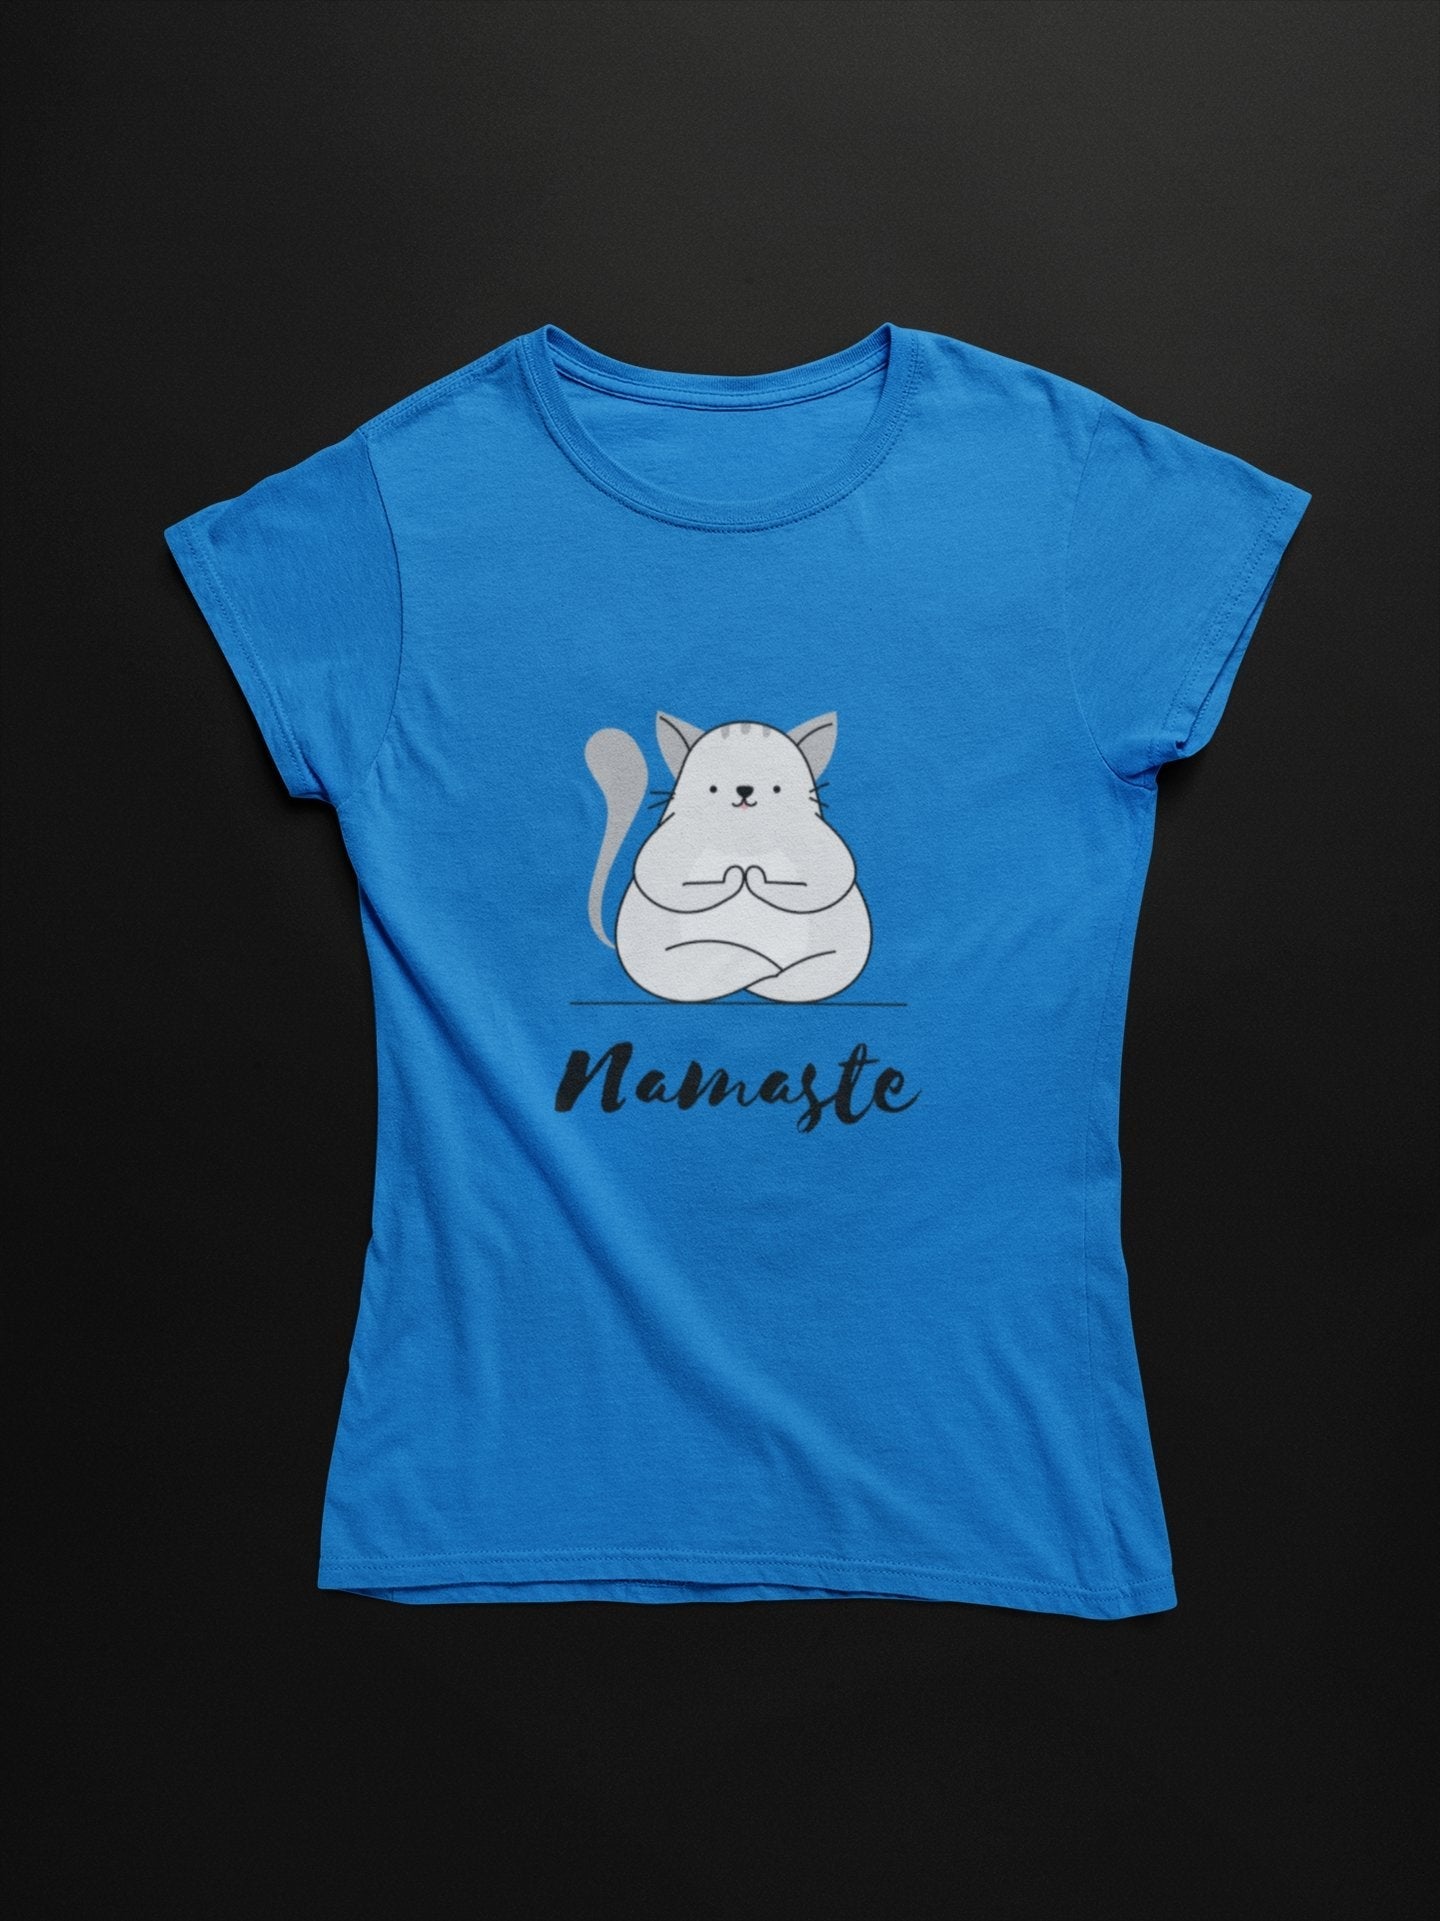 thelegalgang,Cat Namaste pose Design Yoga T shirt for Women,WOMEN.